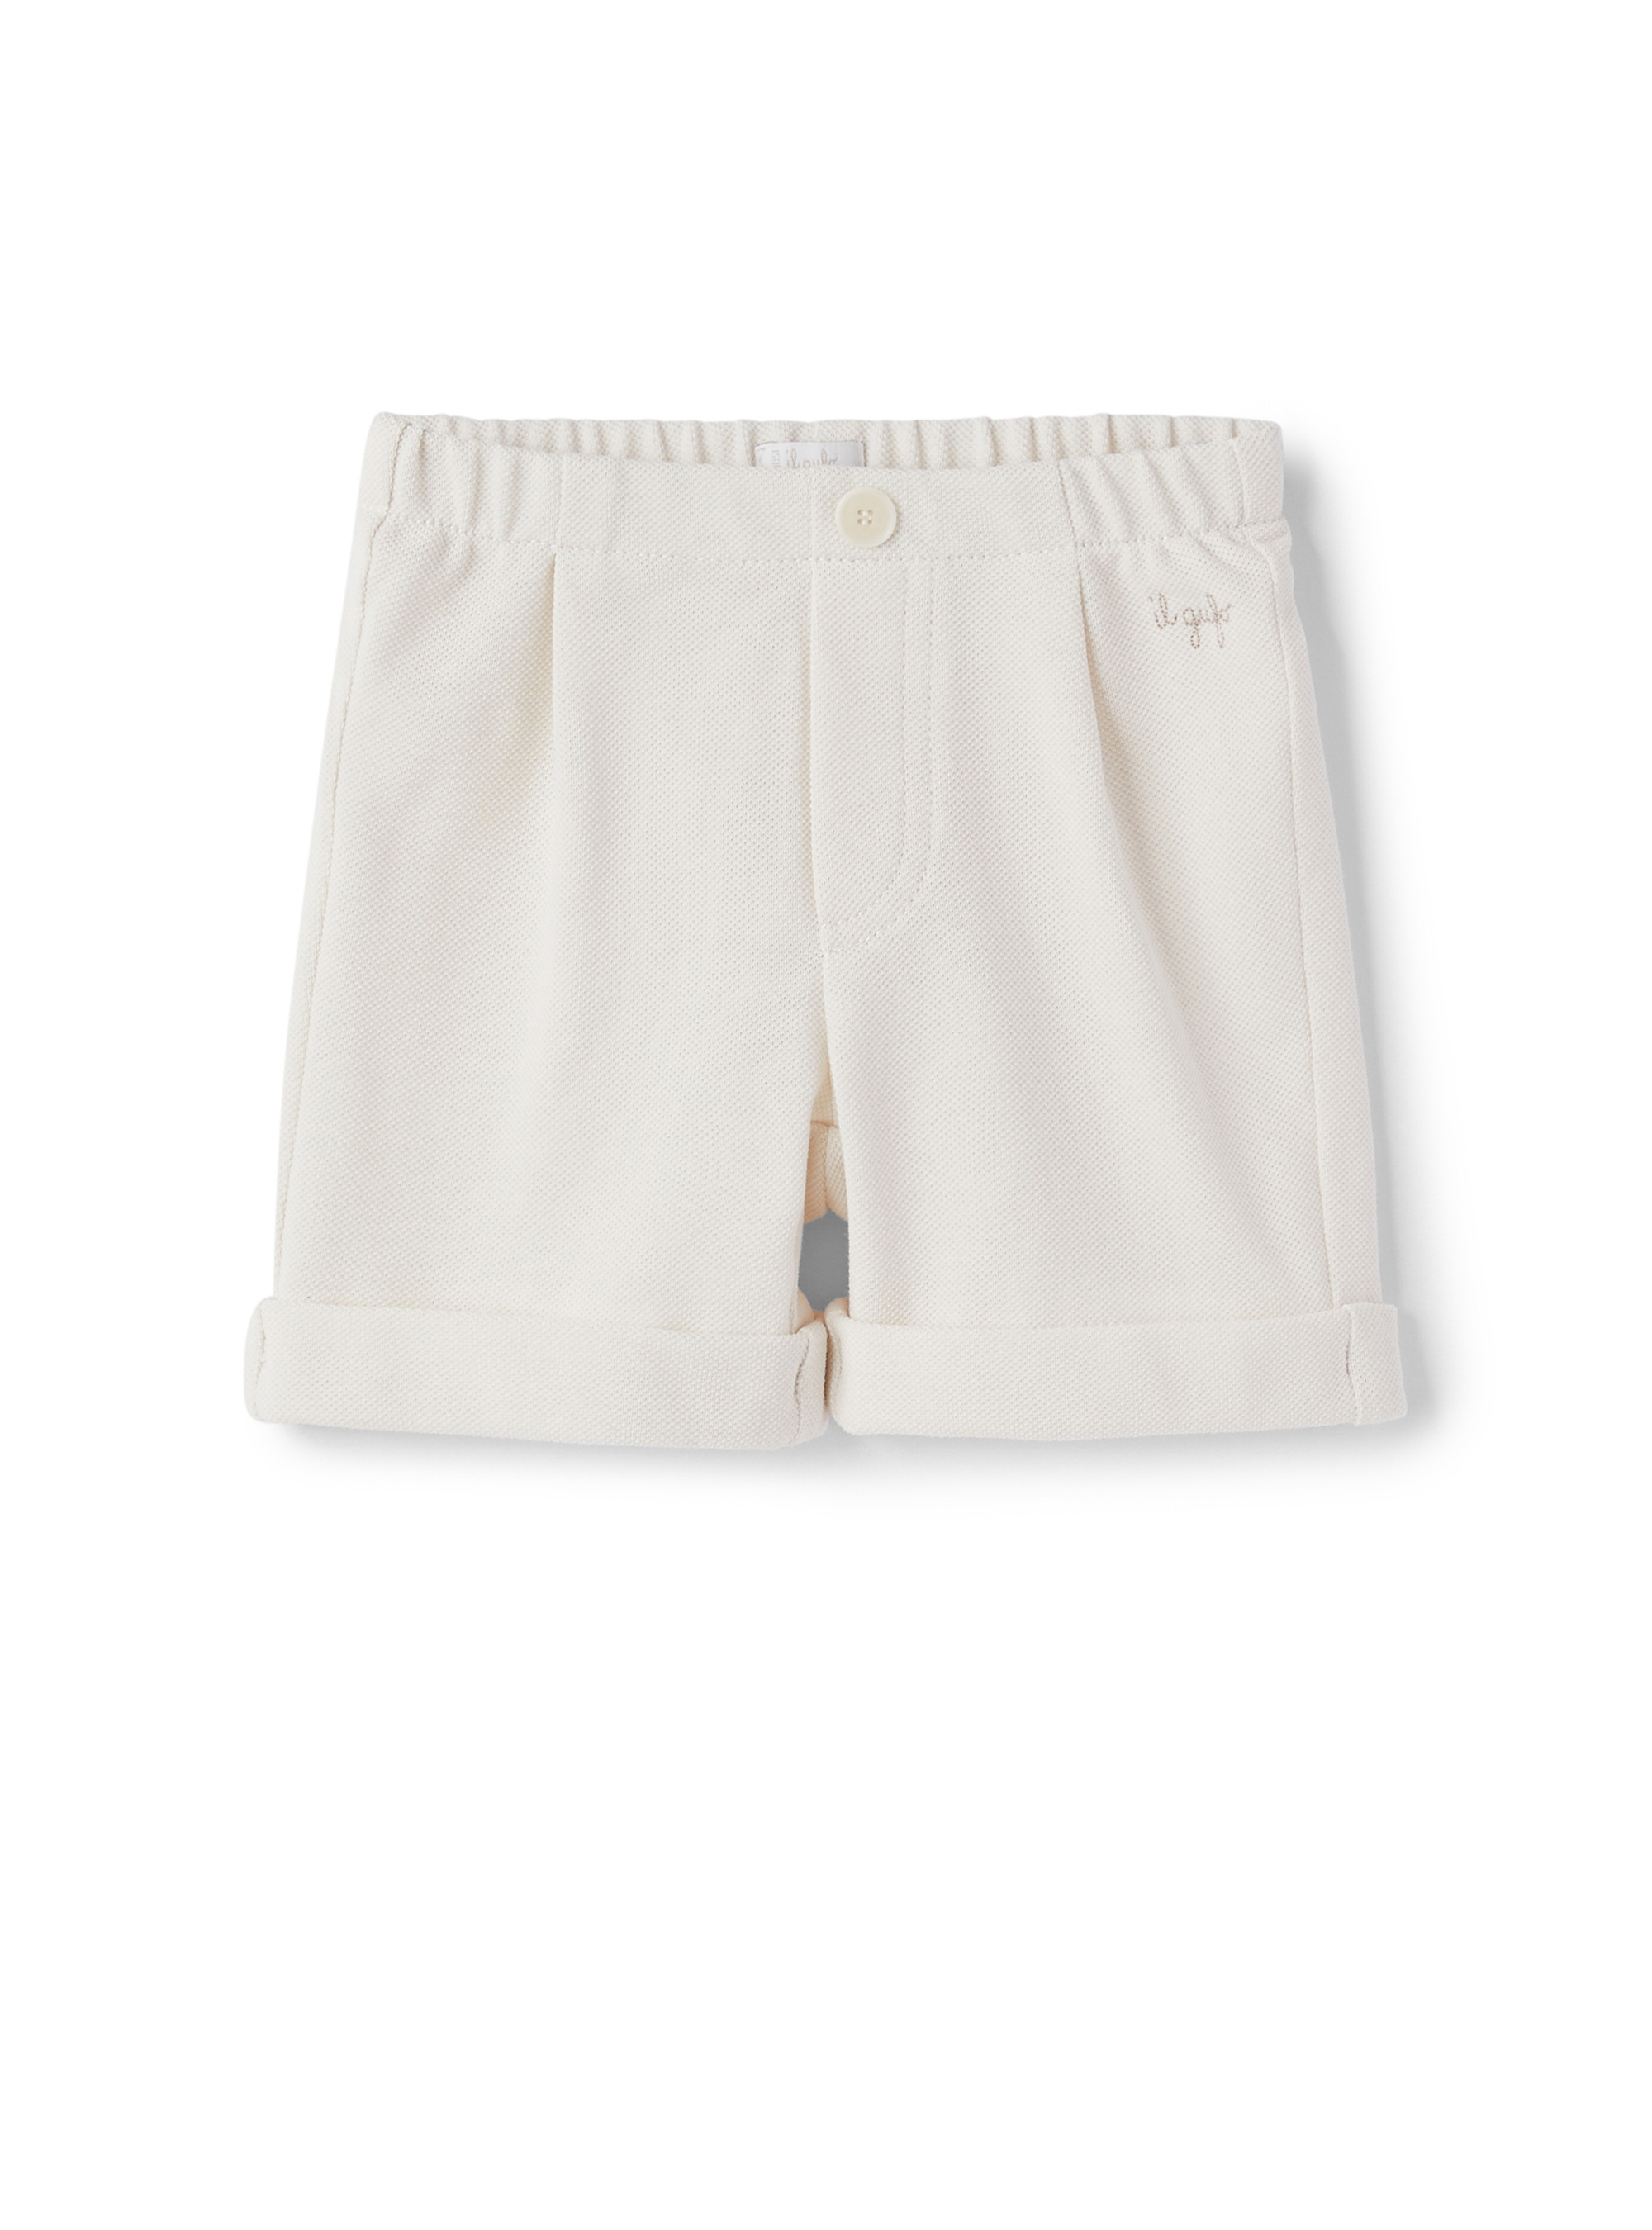 Pantaloncino in cotone piquet bianco - Pantaloni - Il Gufo